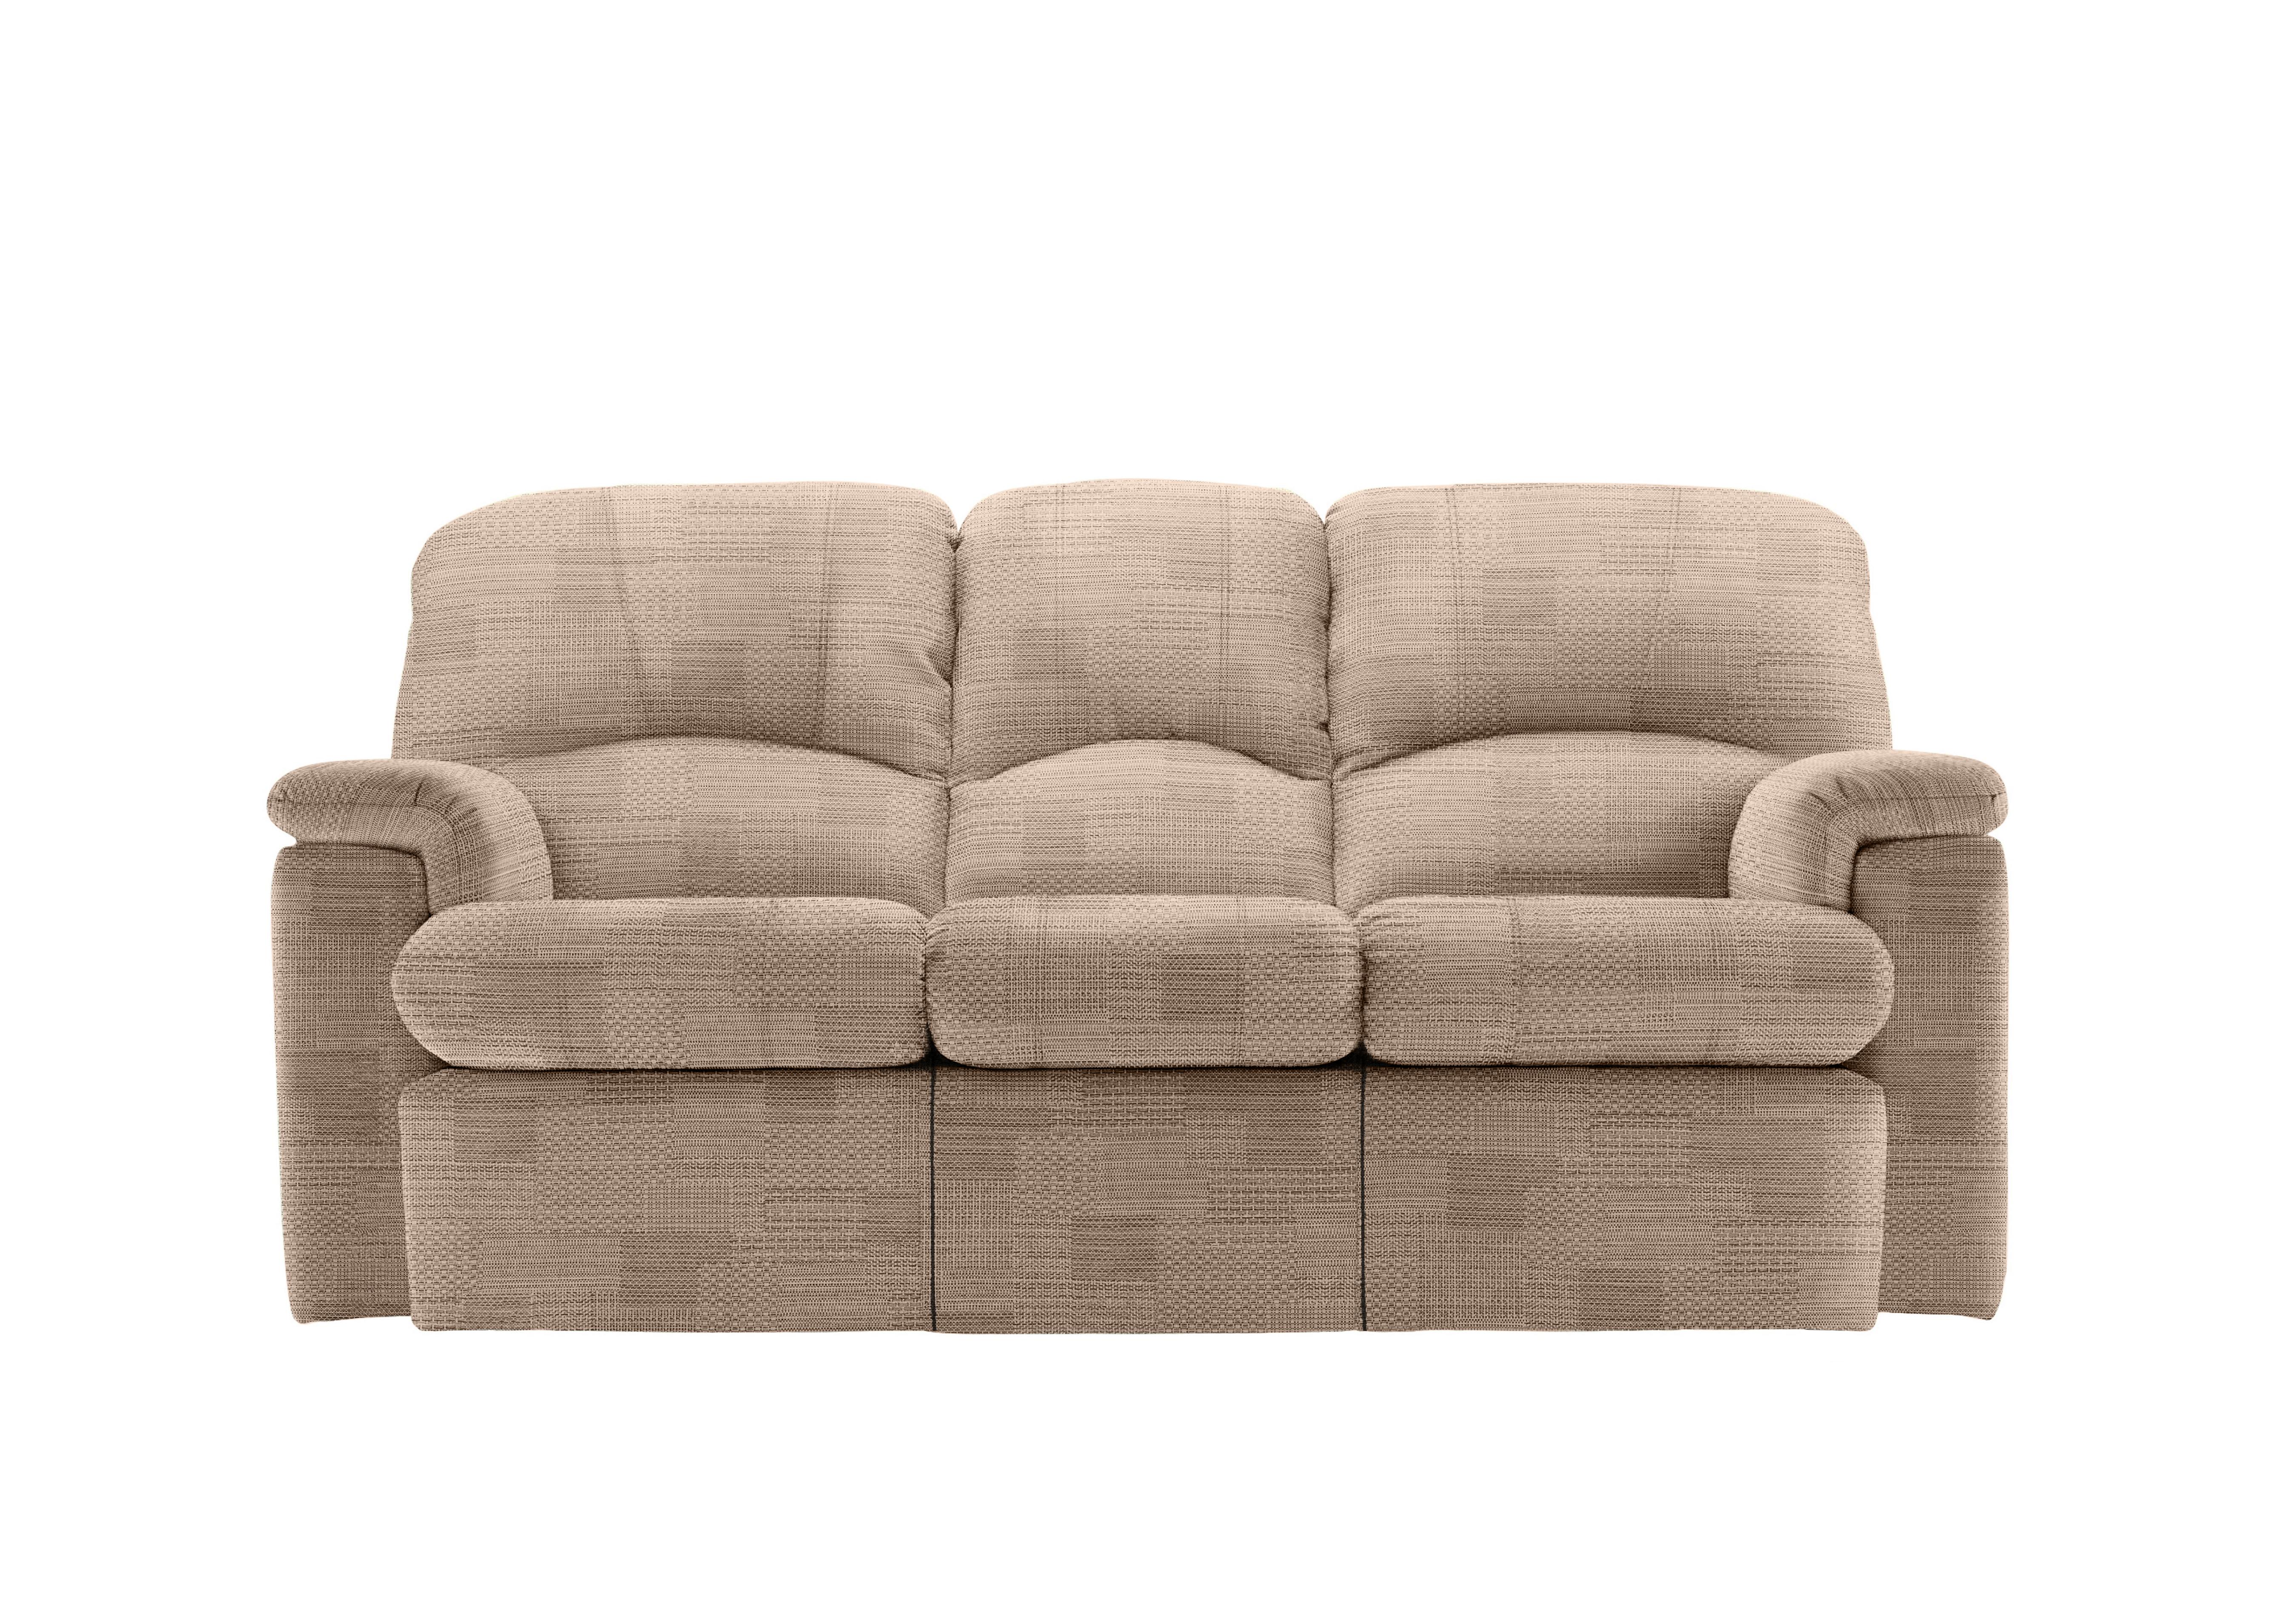 Chloe 3 Seater Fabric Sofa in A800 Faro Sand on Furniture Village